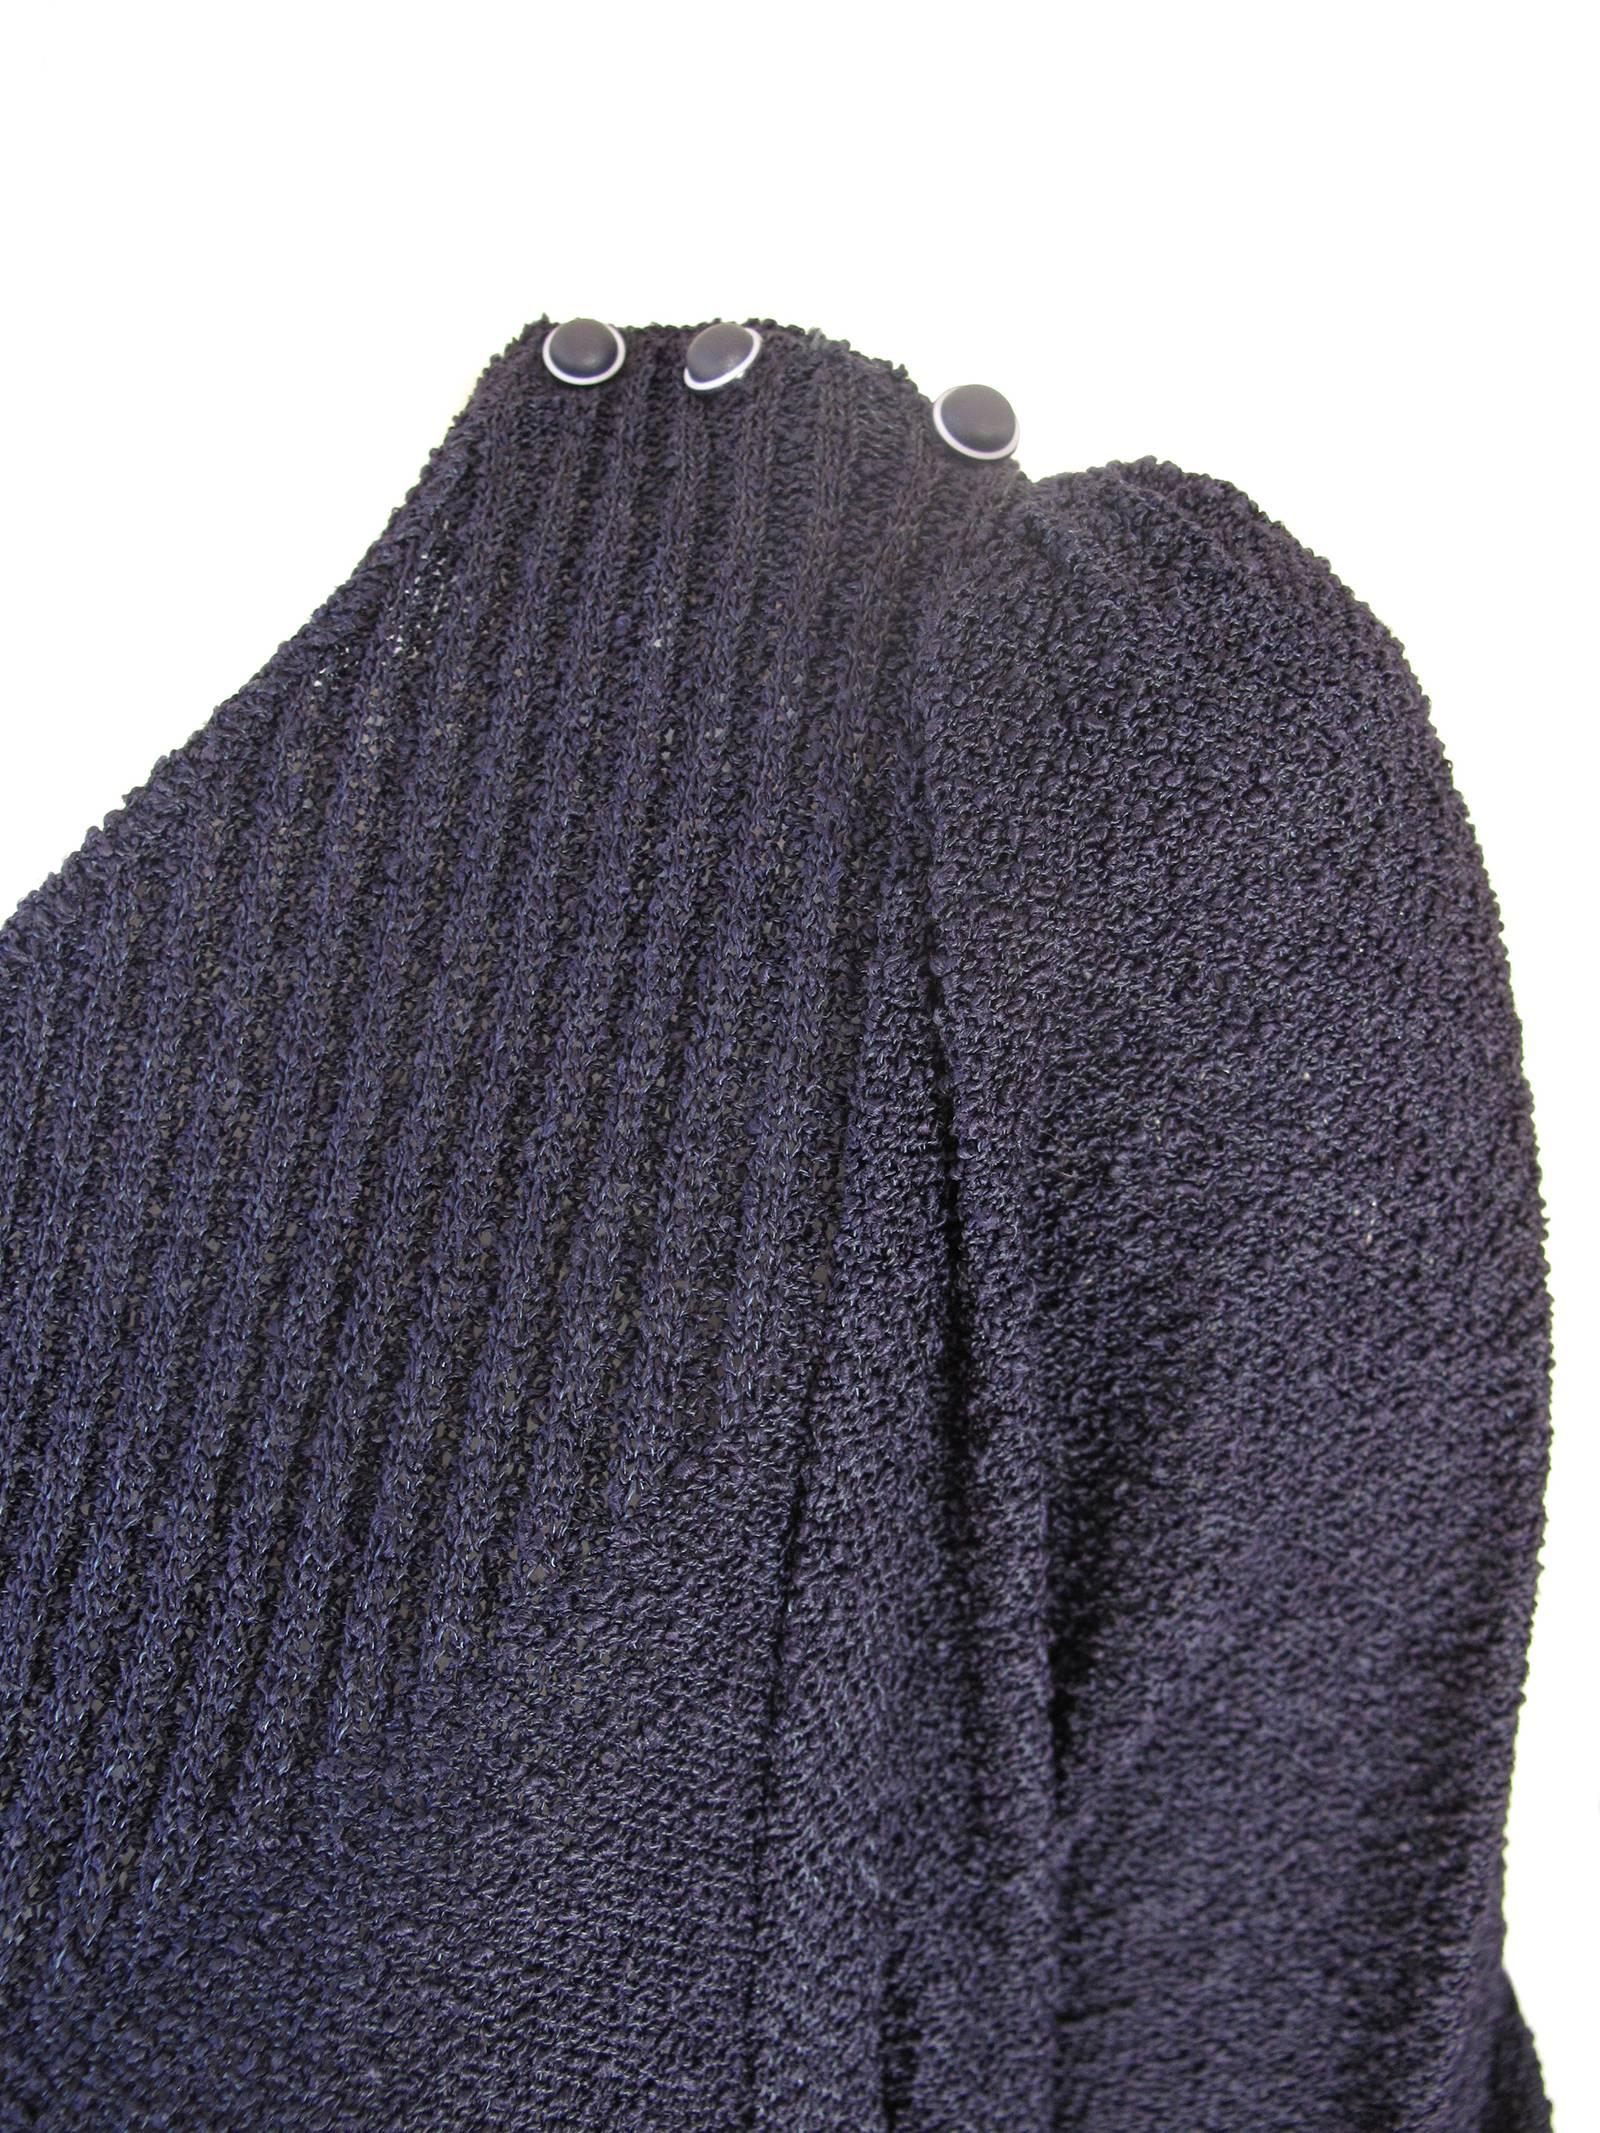 Purple Oscar de la Renta Knit Dress, 1970s 